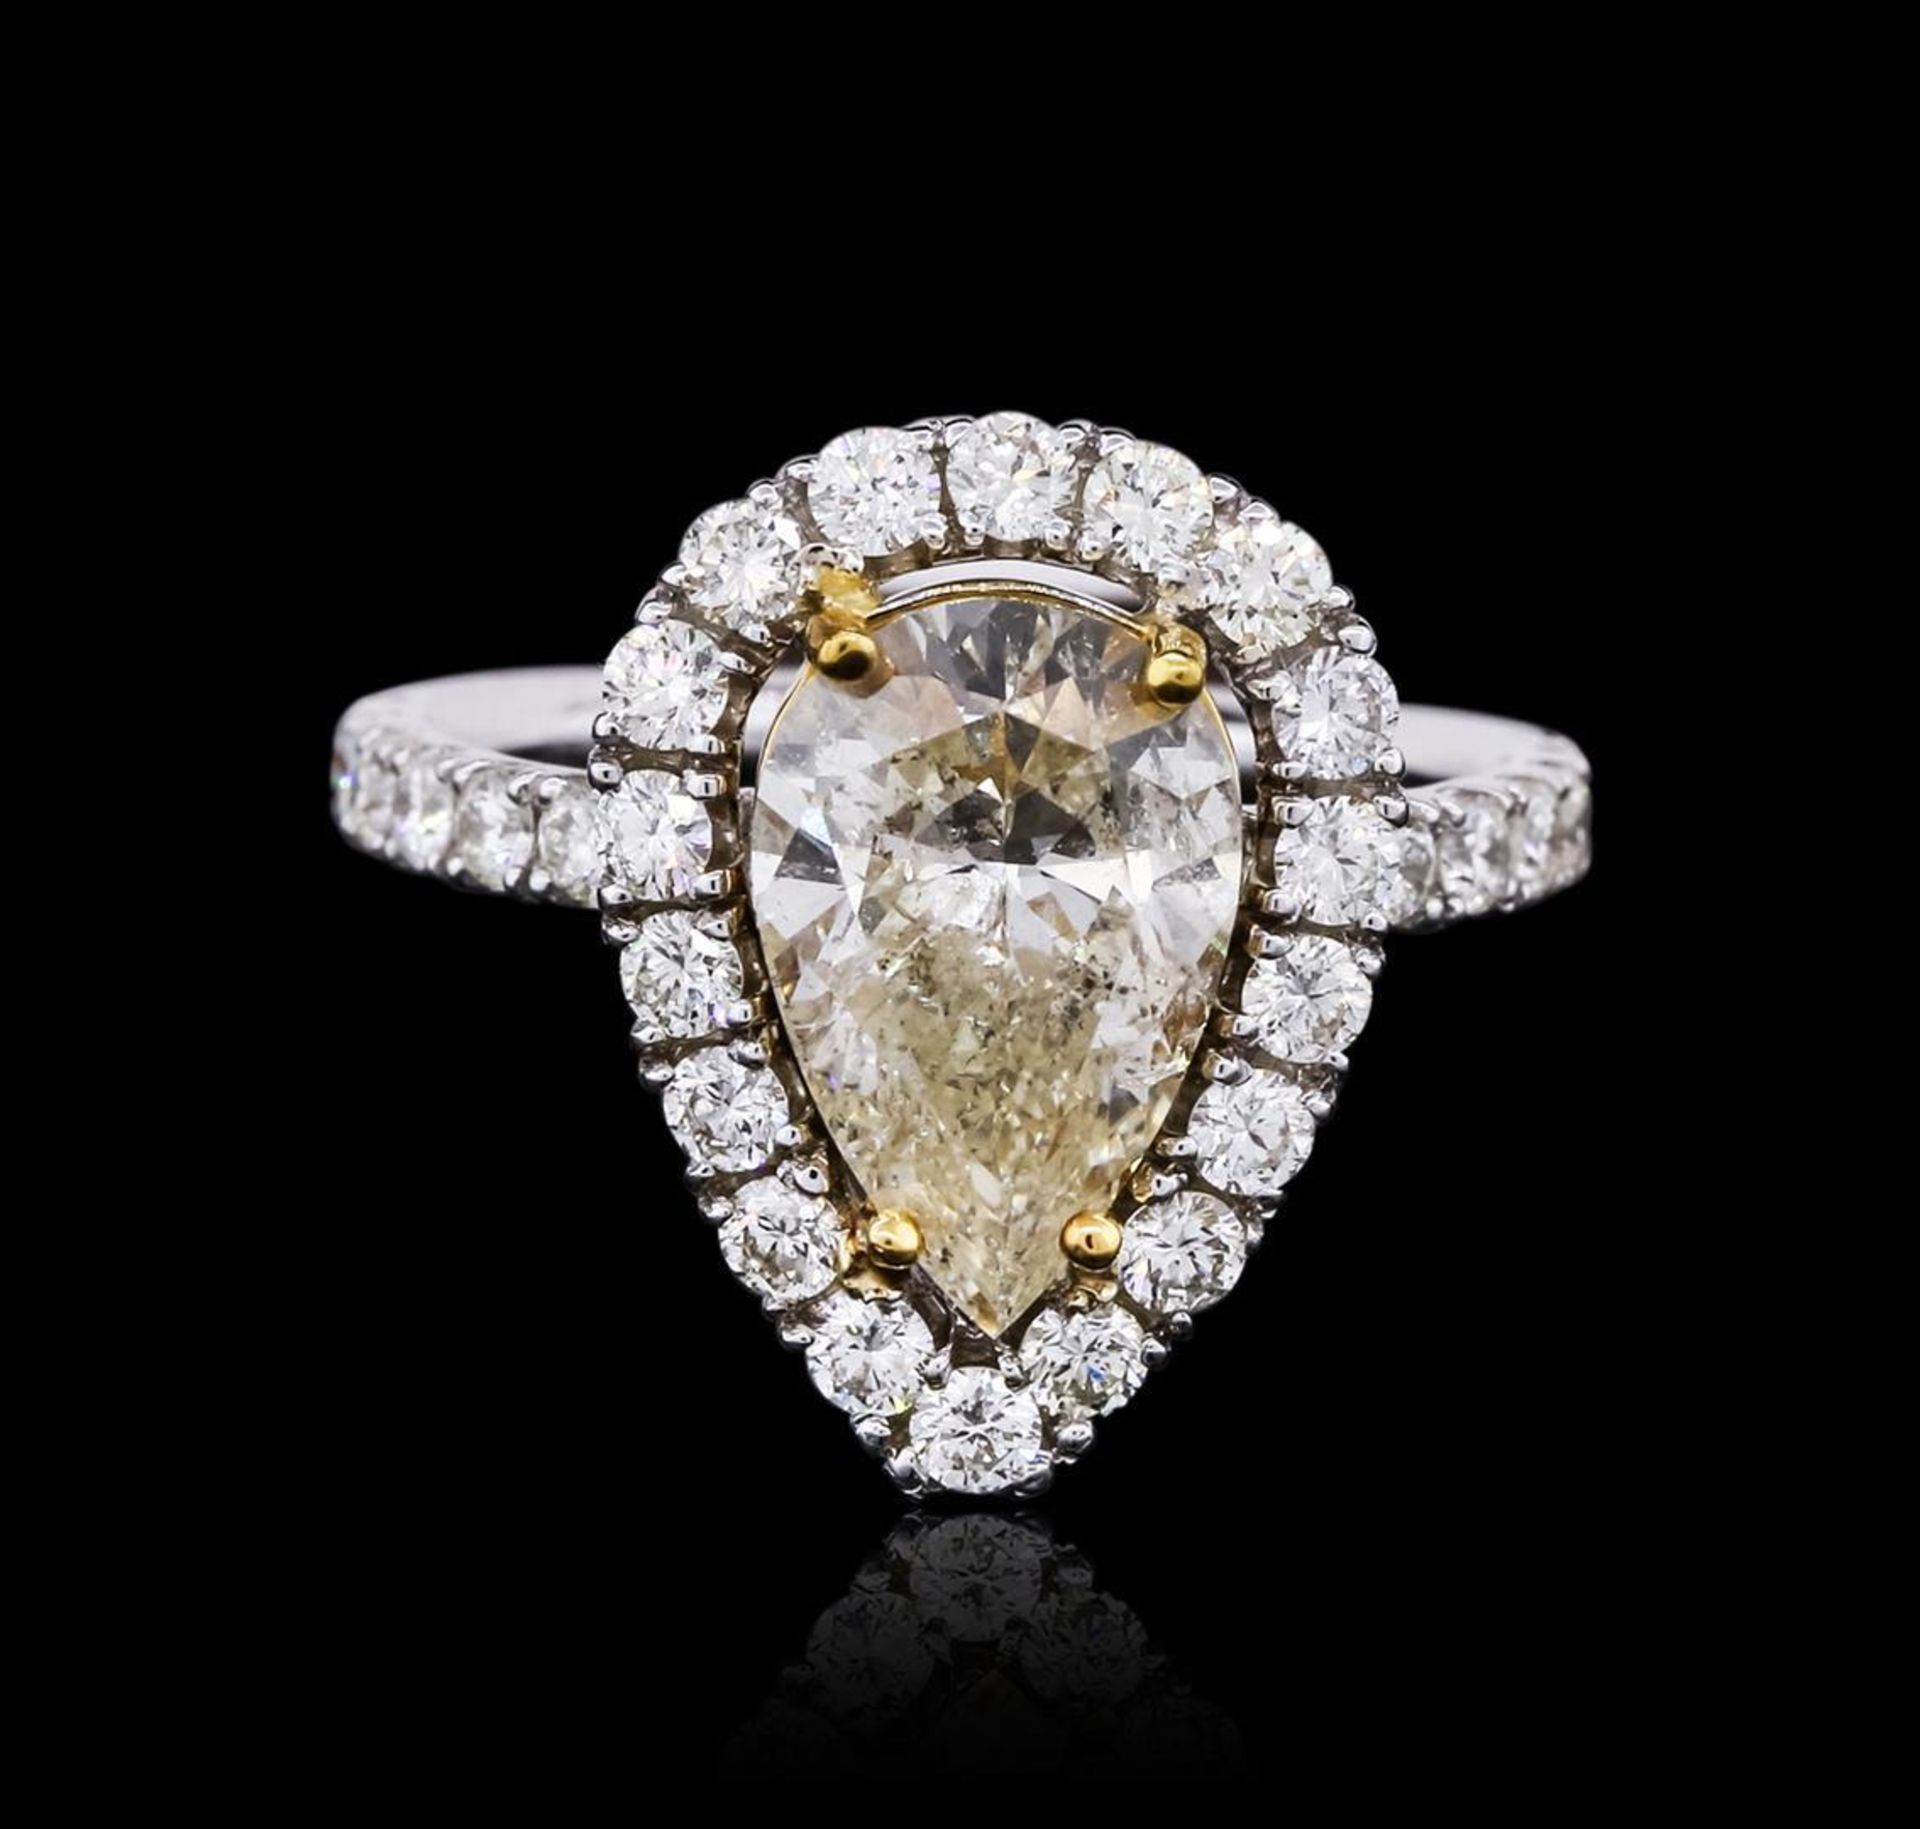 14KT White Gold 3.07 ctw I-1/L Diamond Ring - Image 2 of 3